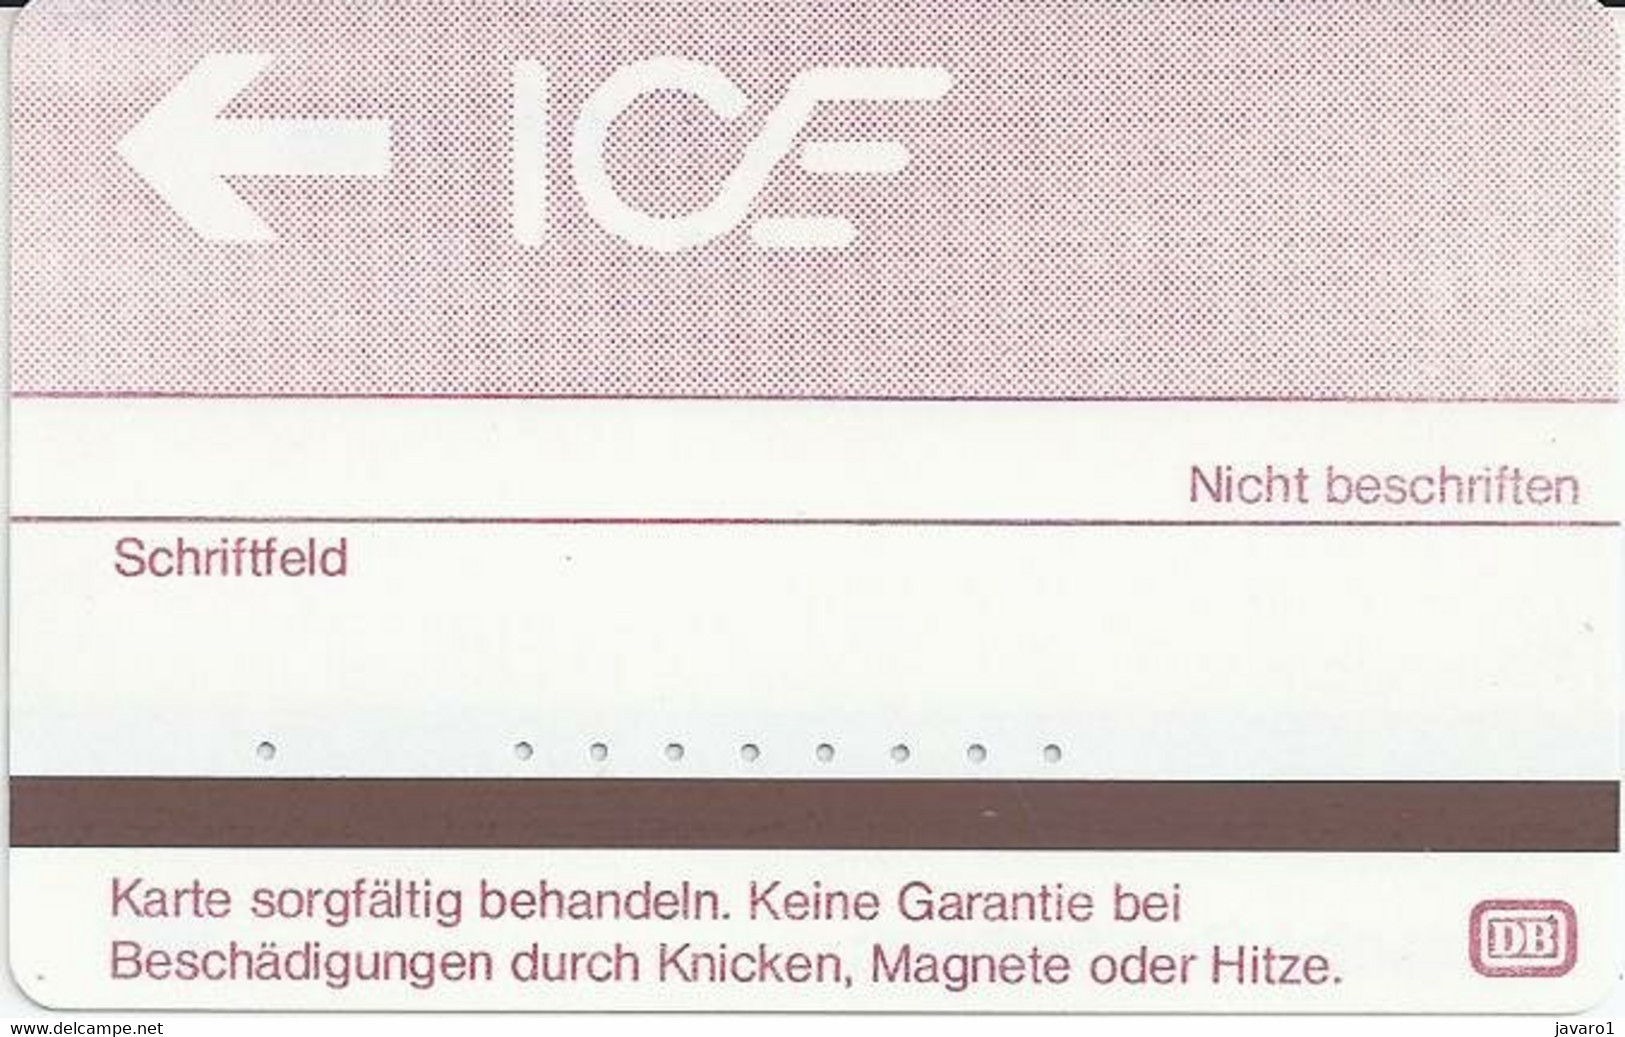 GERMANY : TI1A ICE Wertkarte DM 5,- (DB) USED - Precursors